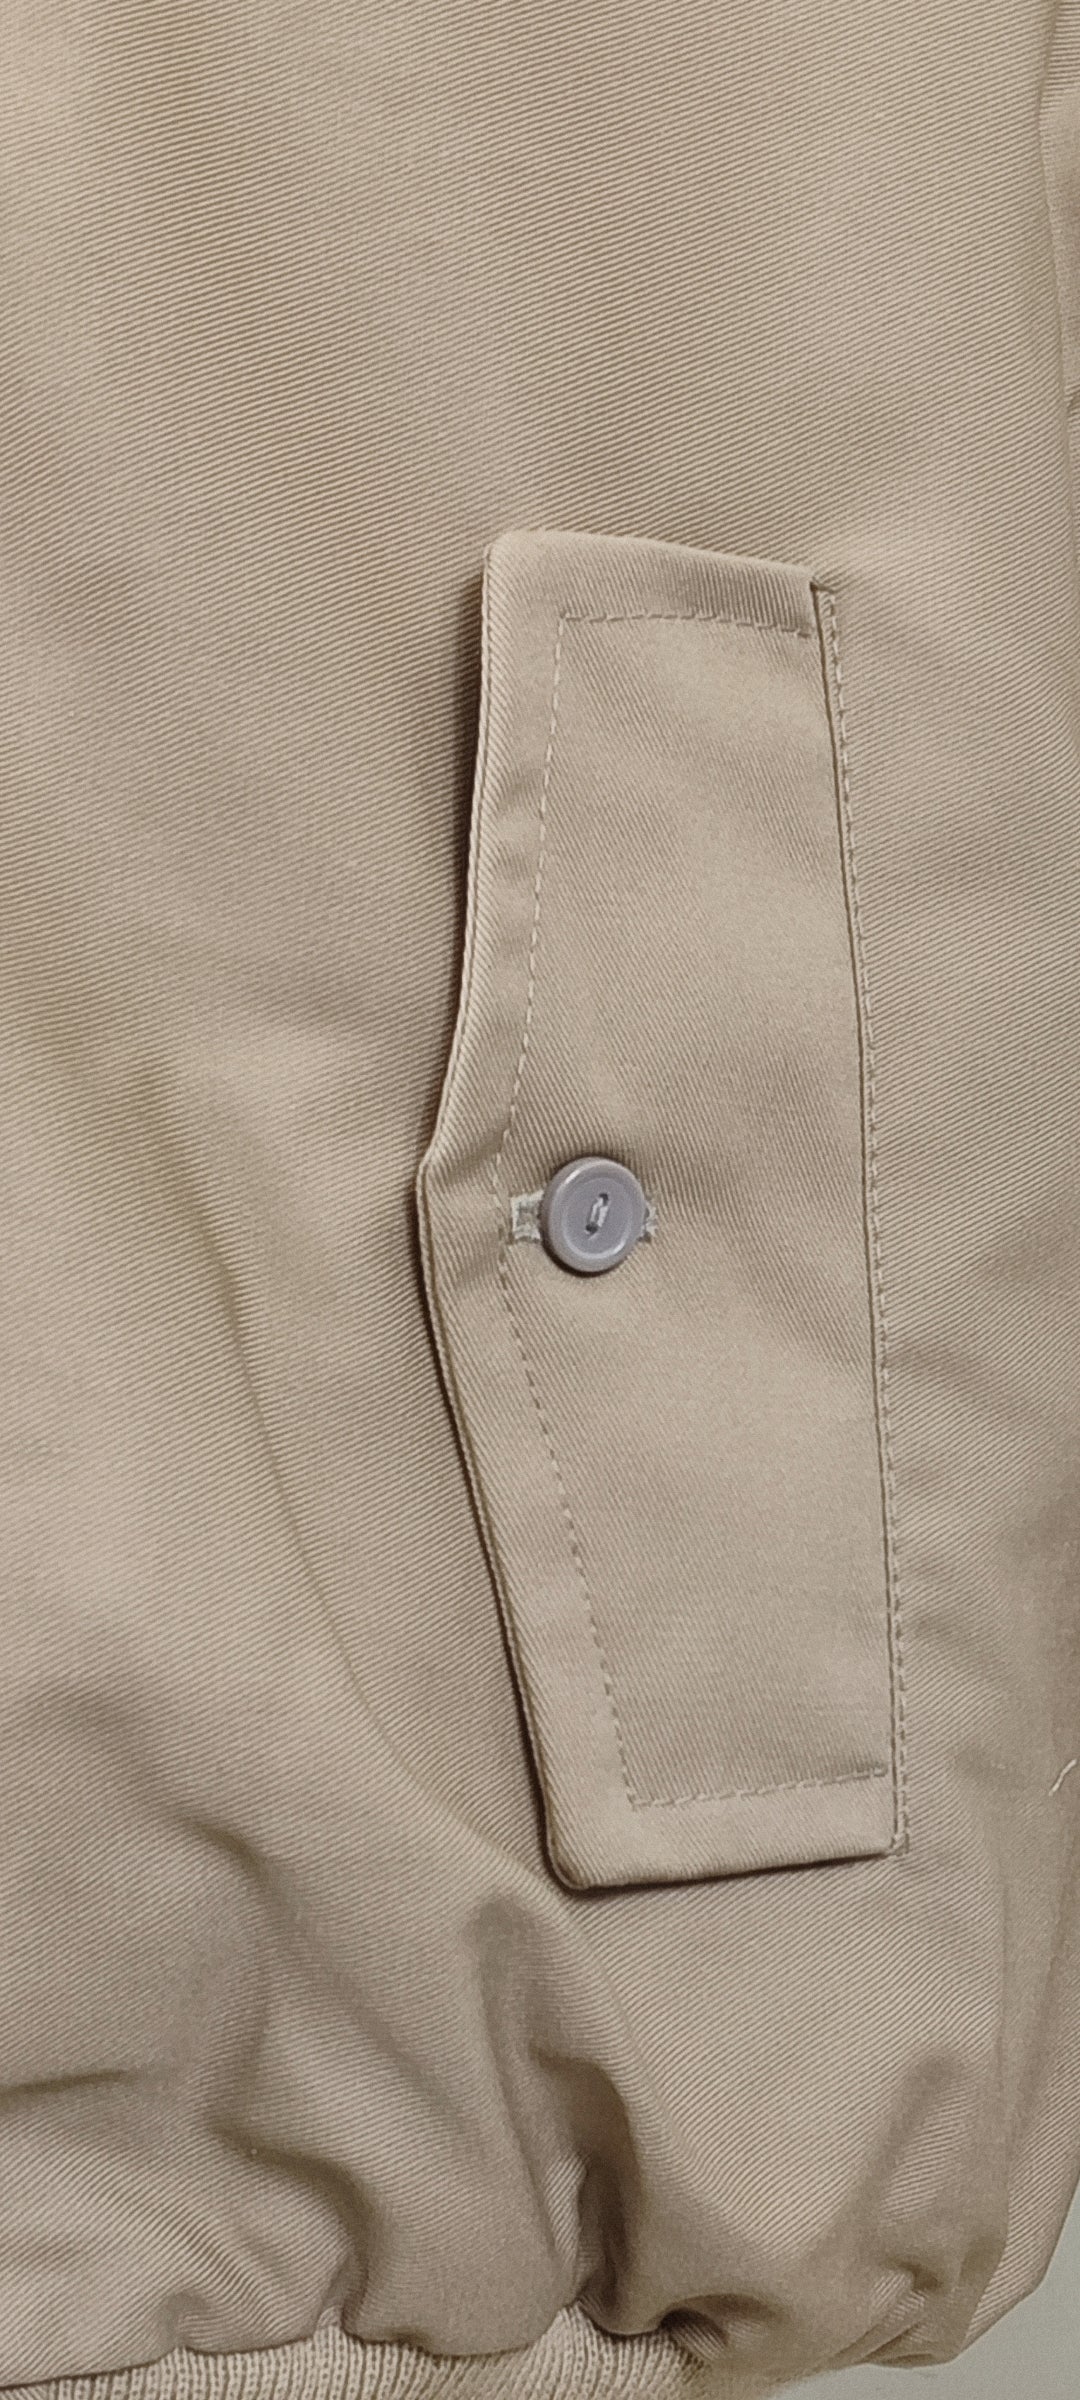 Giacca Harrington beige da uomo in cotone Made in England - Man Beige Harrington Jacket